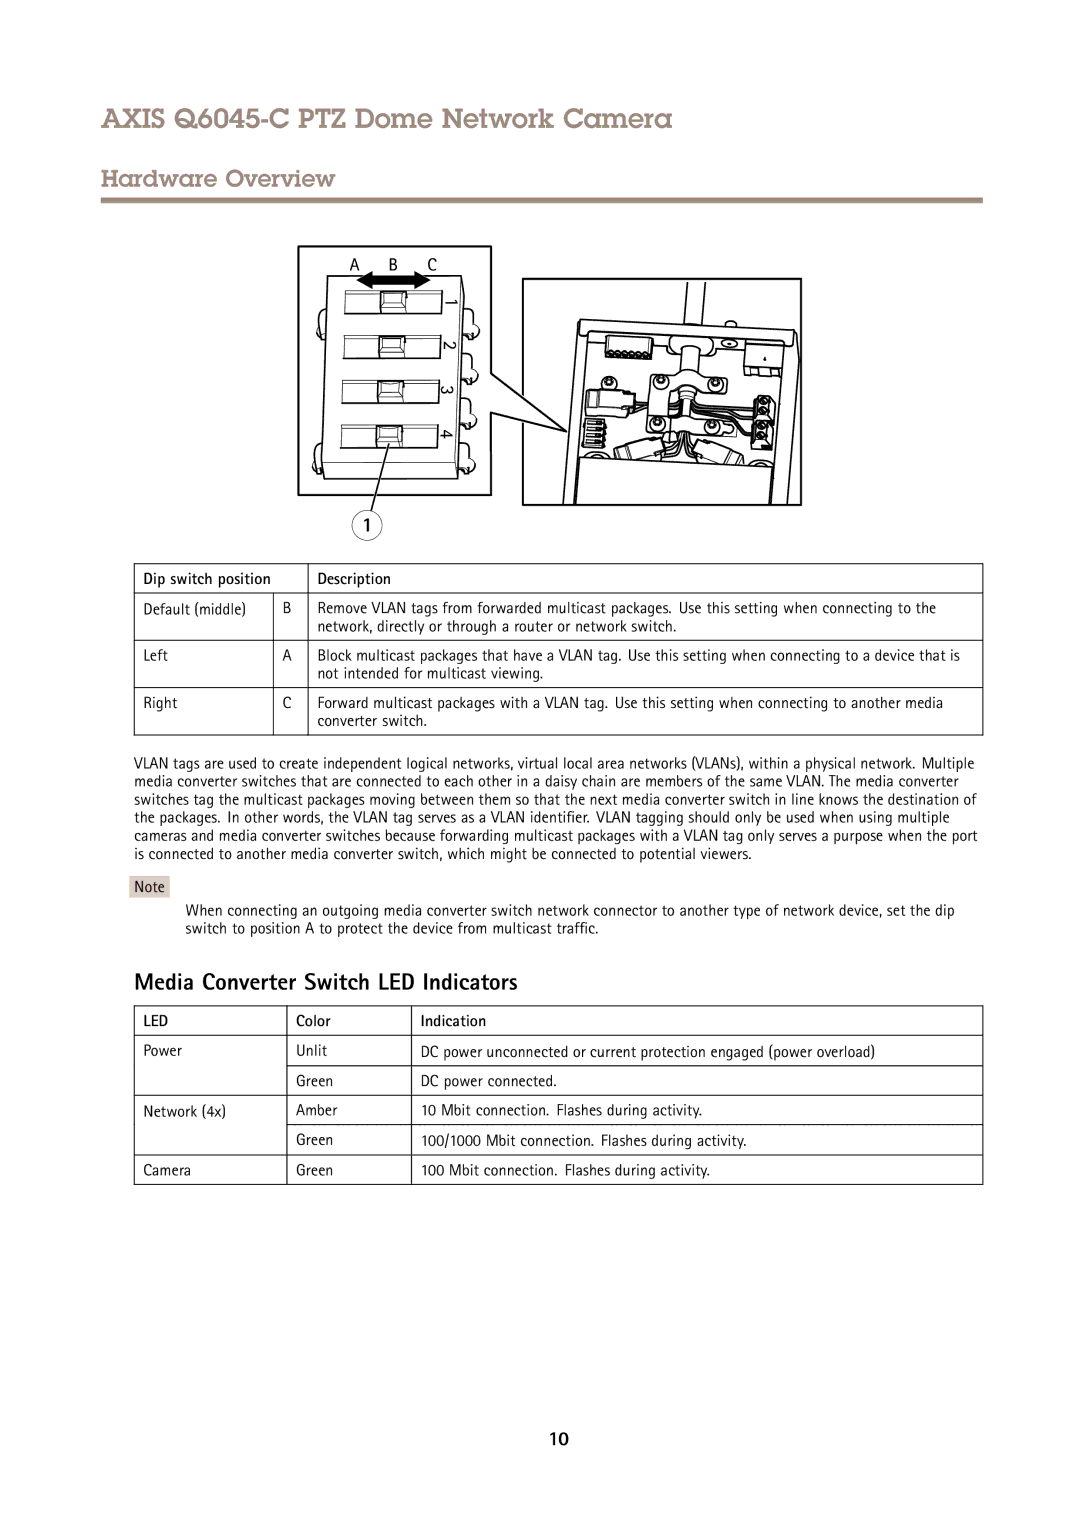 Axis Communications Q6045-C PTZ user manual Media Converter Switch LED Indicators, Description 